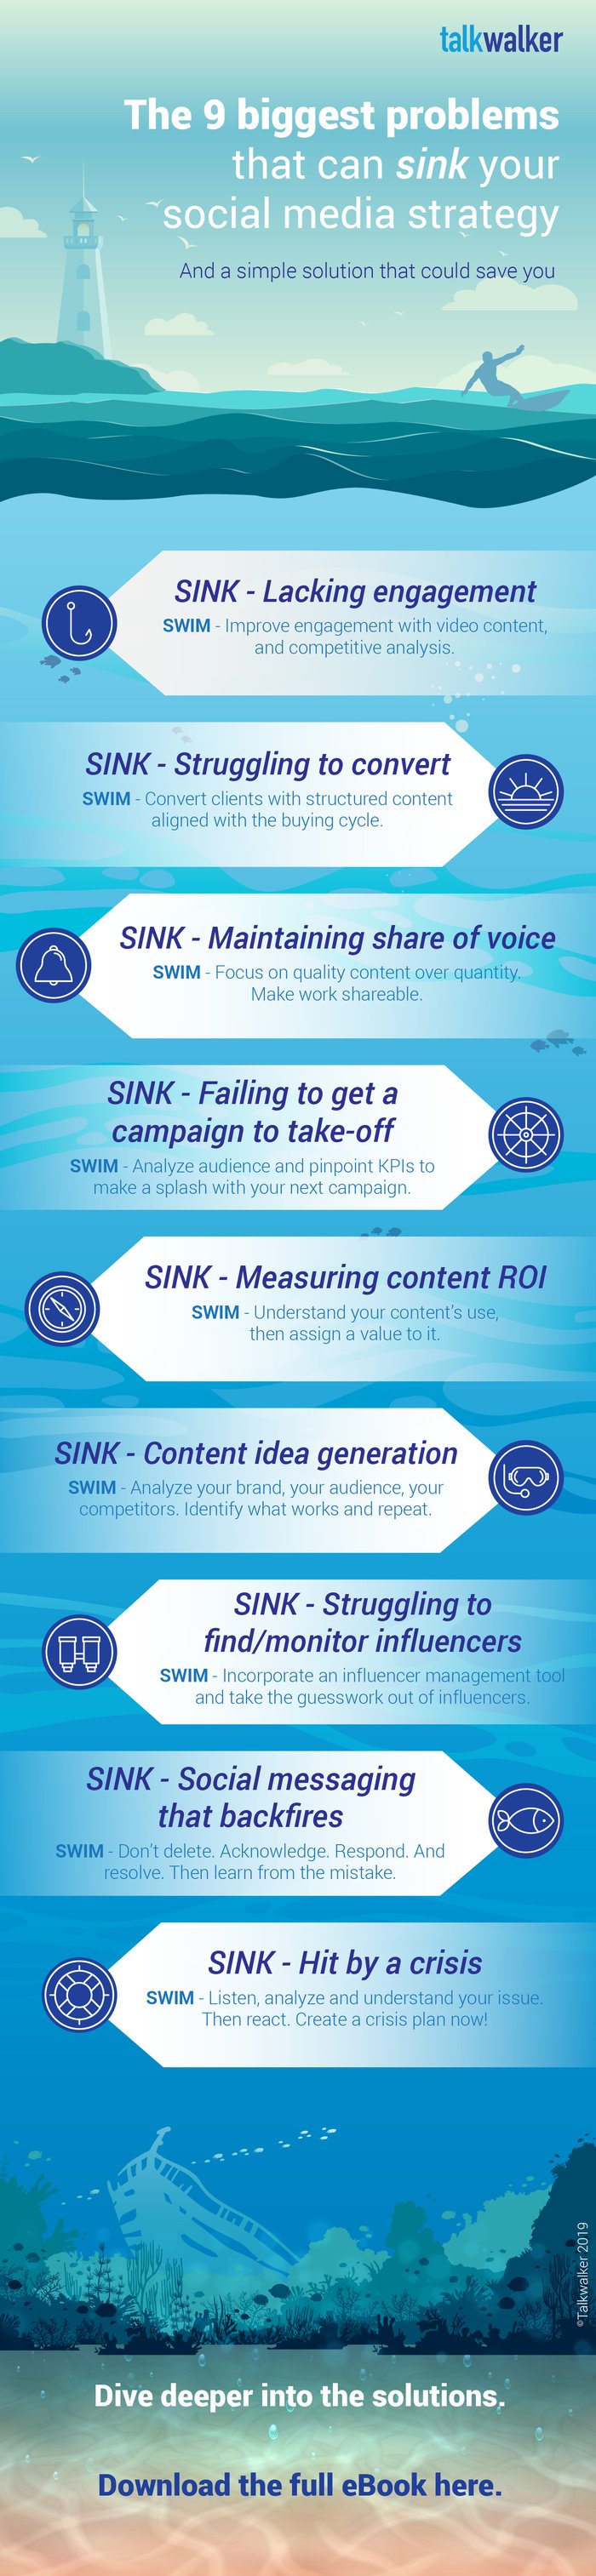 social media marketing strategy infographic